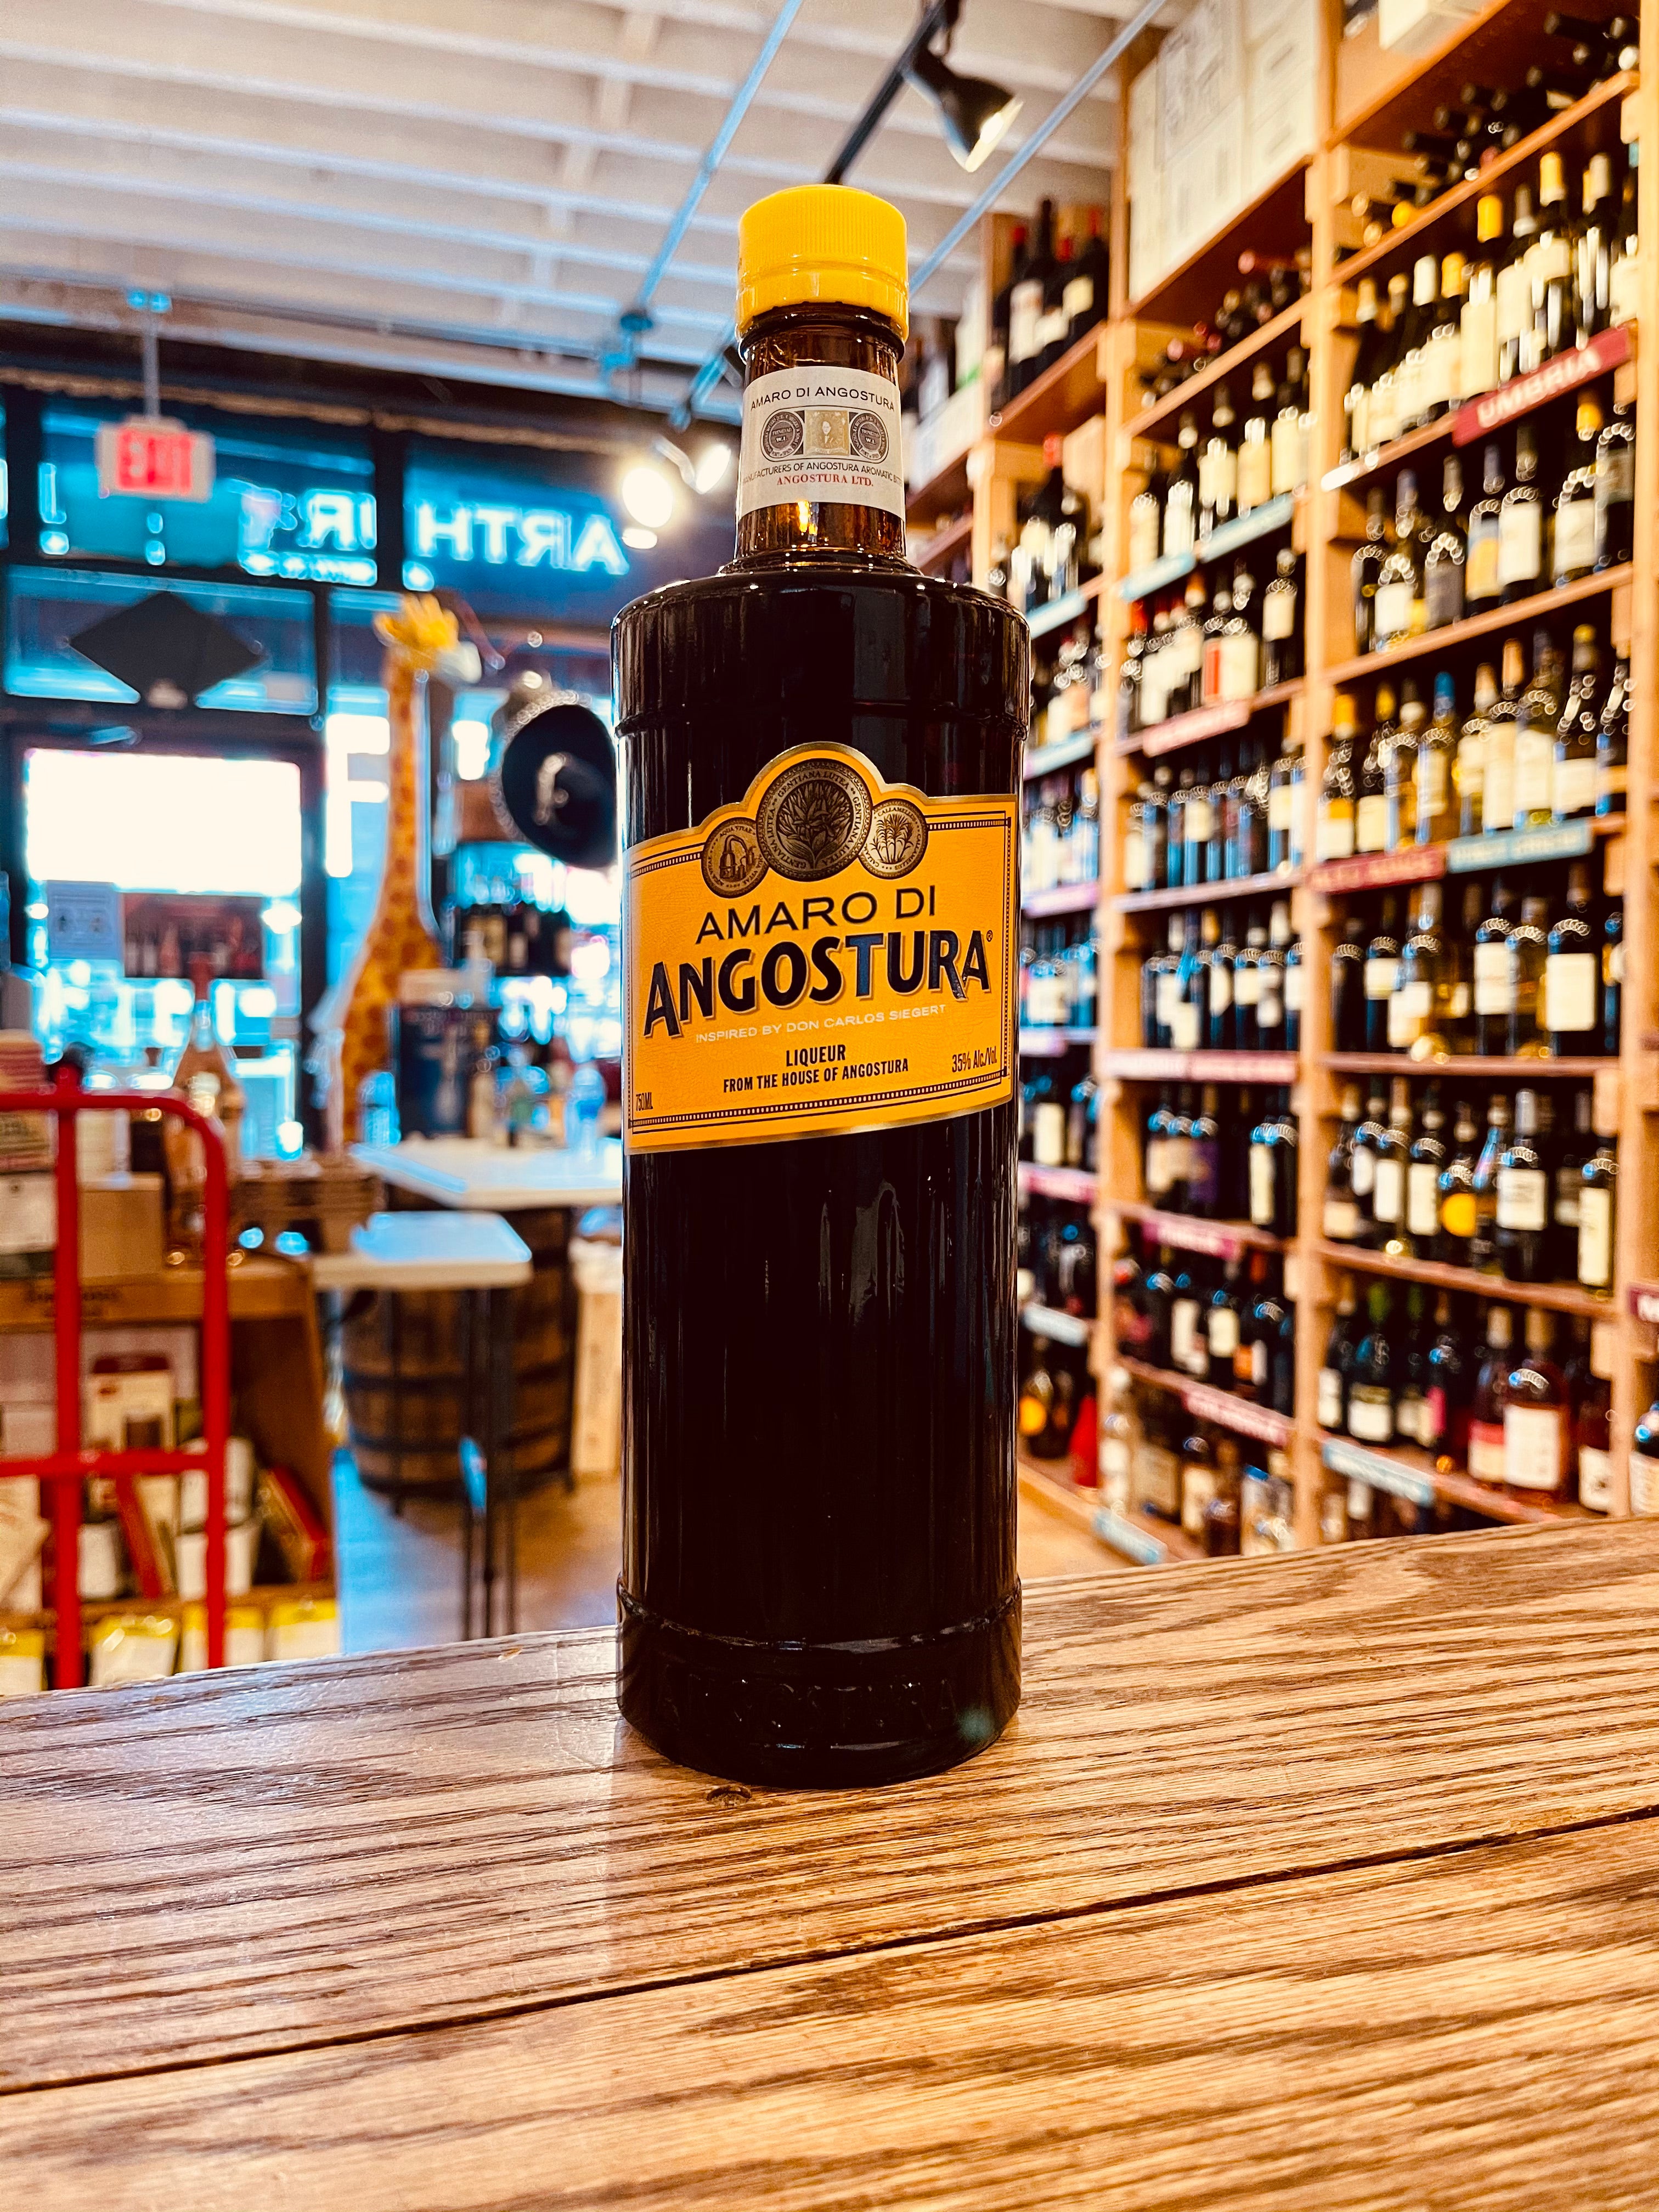 Angostura di Amaro 750mL dark bottle with yellow label and top